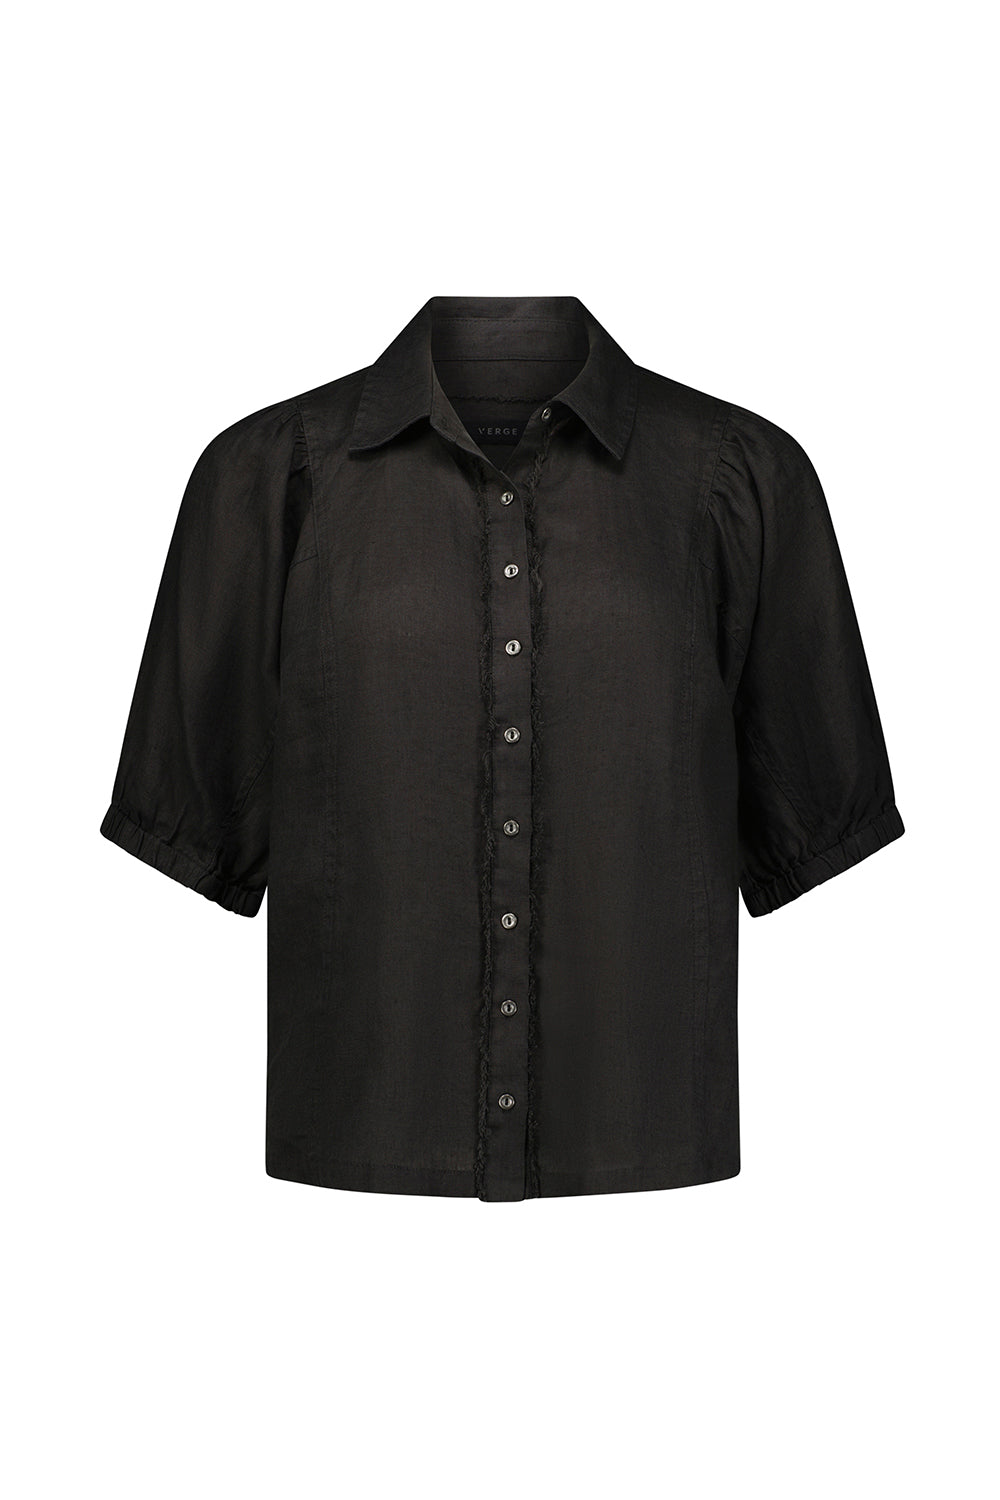 Adorn Shirt - Black - VERGE